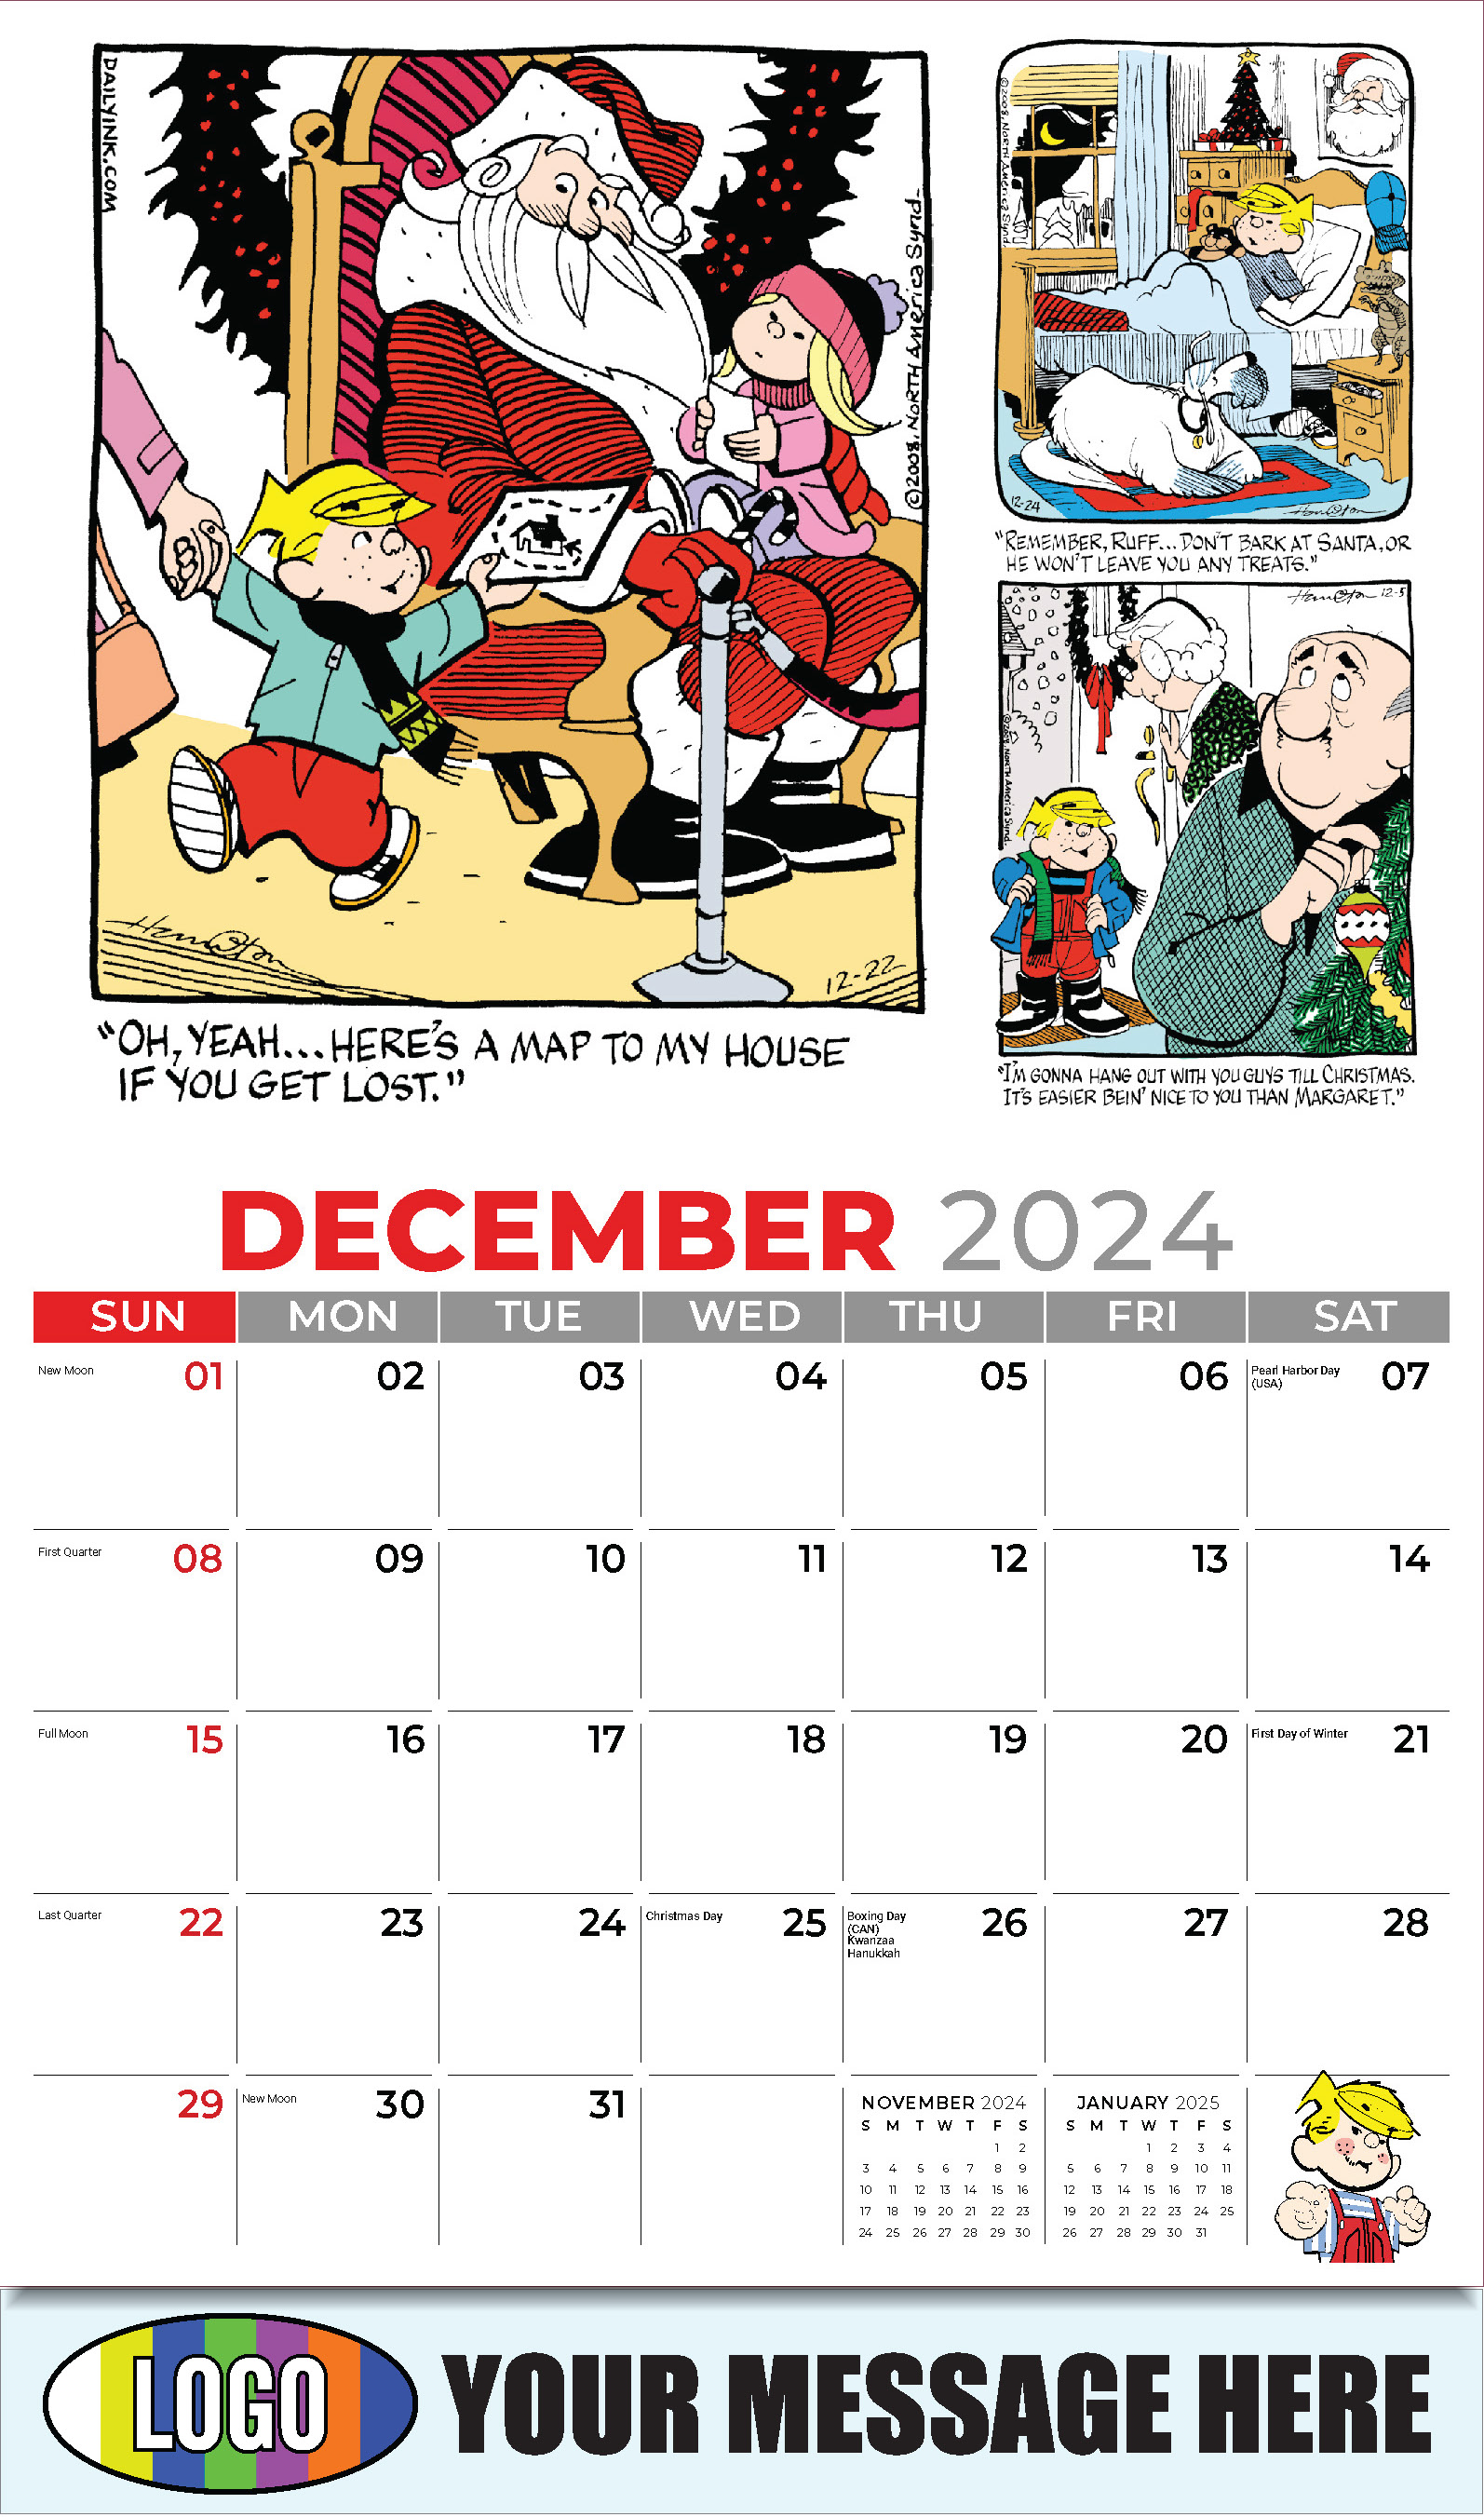 Dennis the Menace 2025 Business Promotional Wall Calendar - December_a